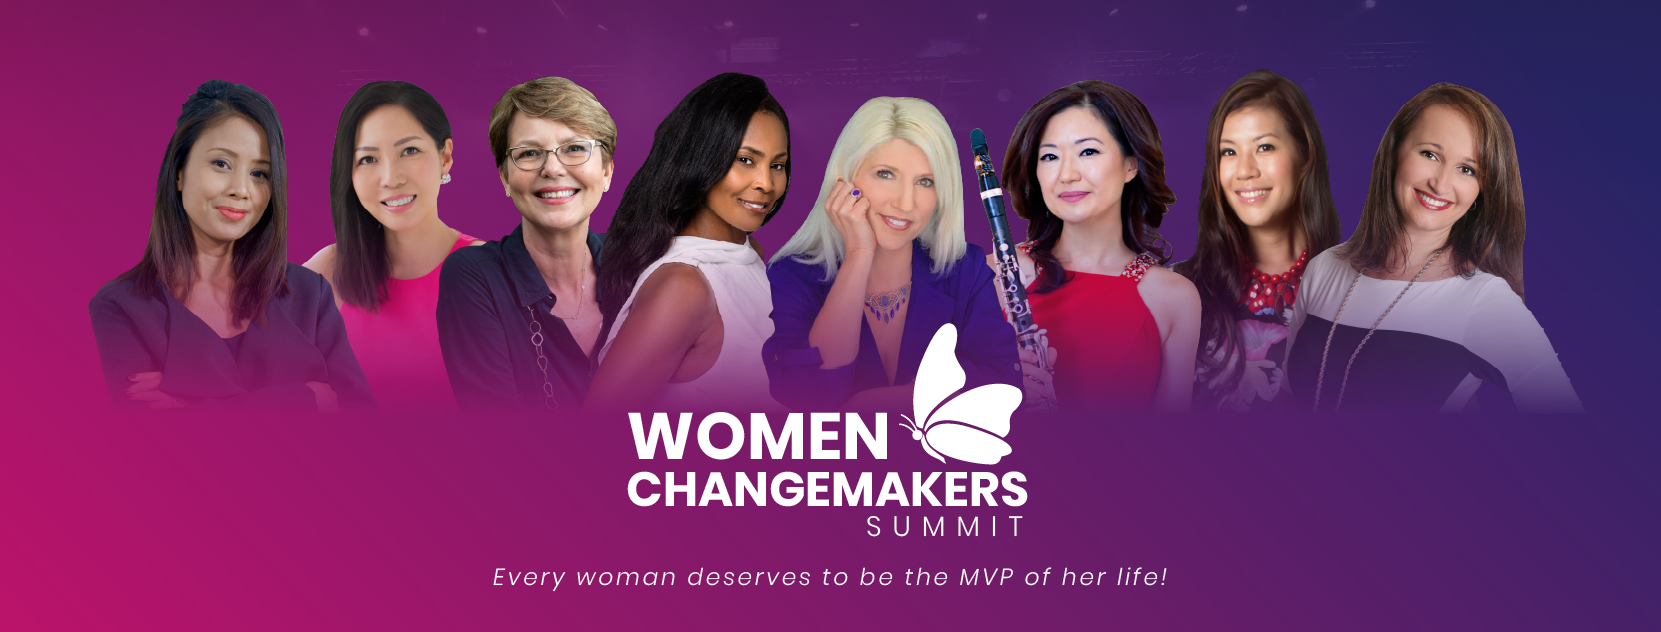 Women Changemakers Summit FB page banner